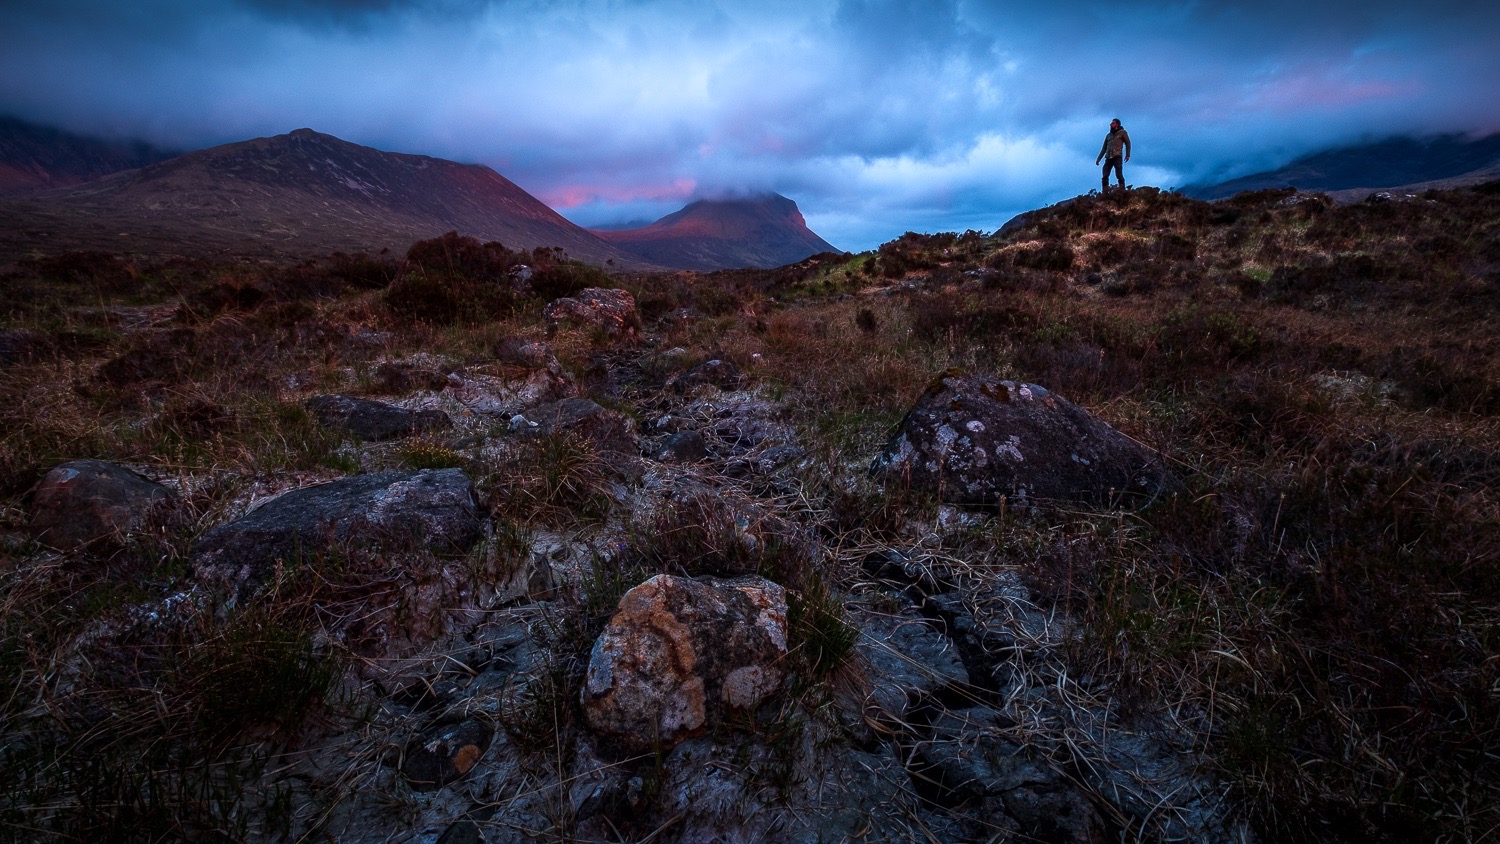 0053-scotland-tamron-le monde de la photo-paysage-20190509221920-compress.jpg